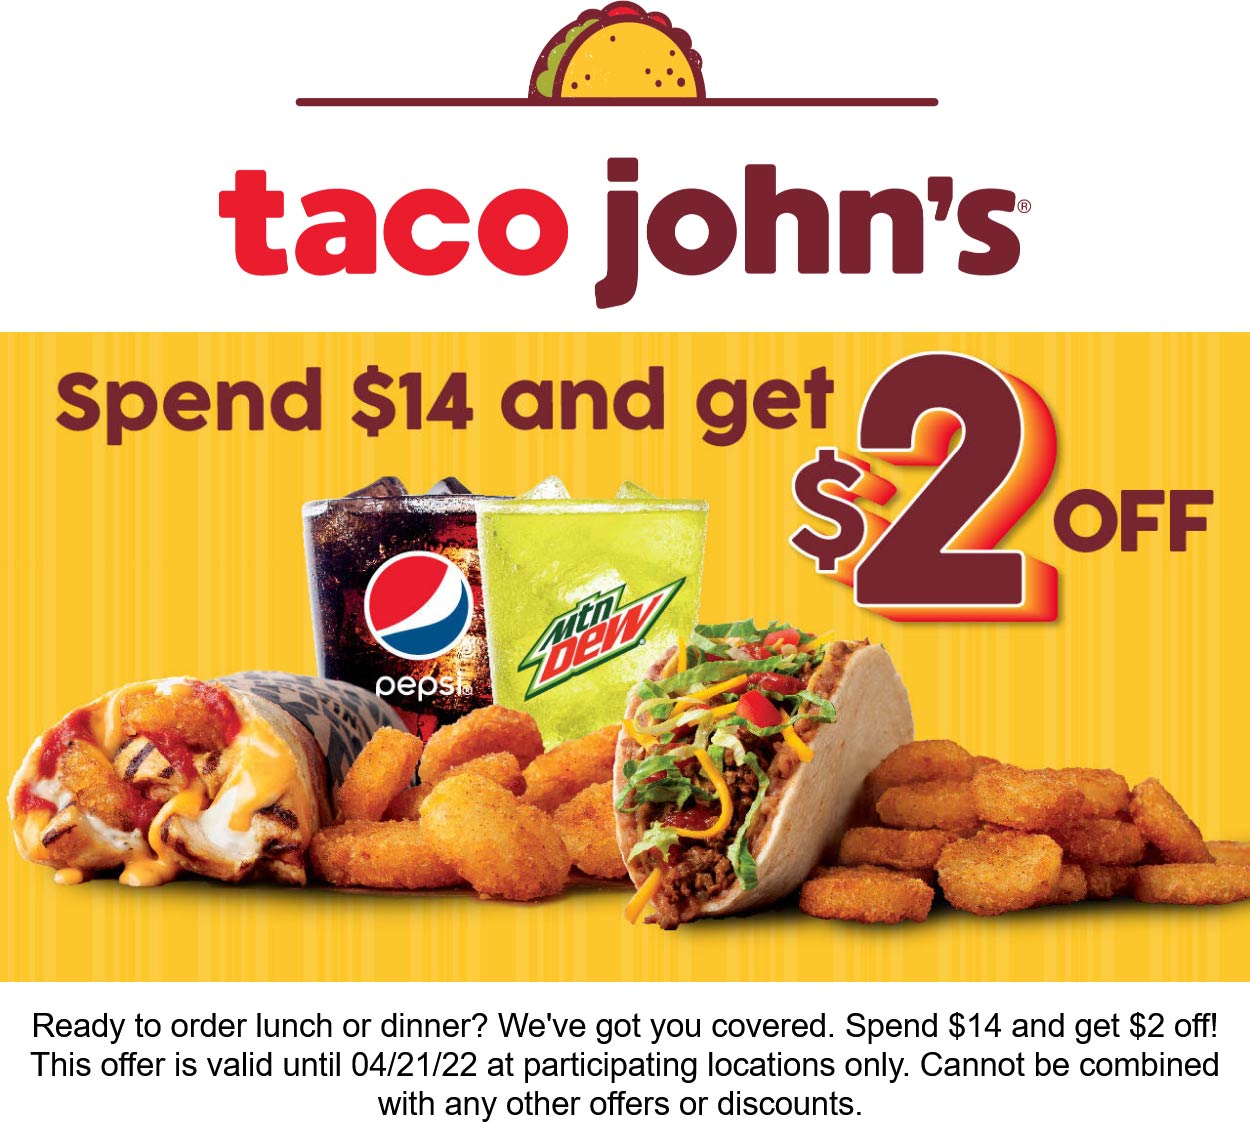 Taco Johns restaurants Coupon  $2 off $14 at Taco Johns restaurants #tacojohns 